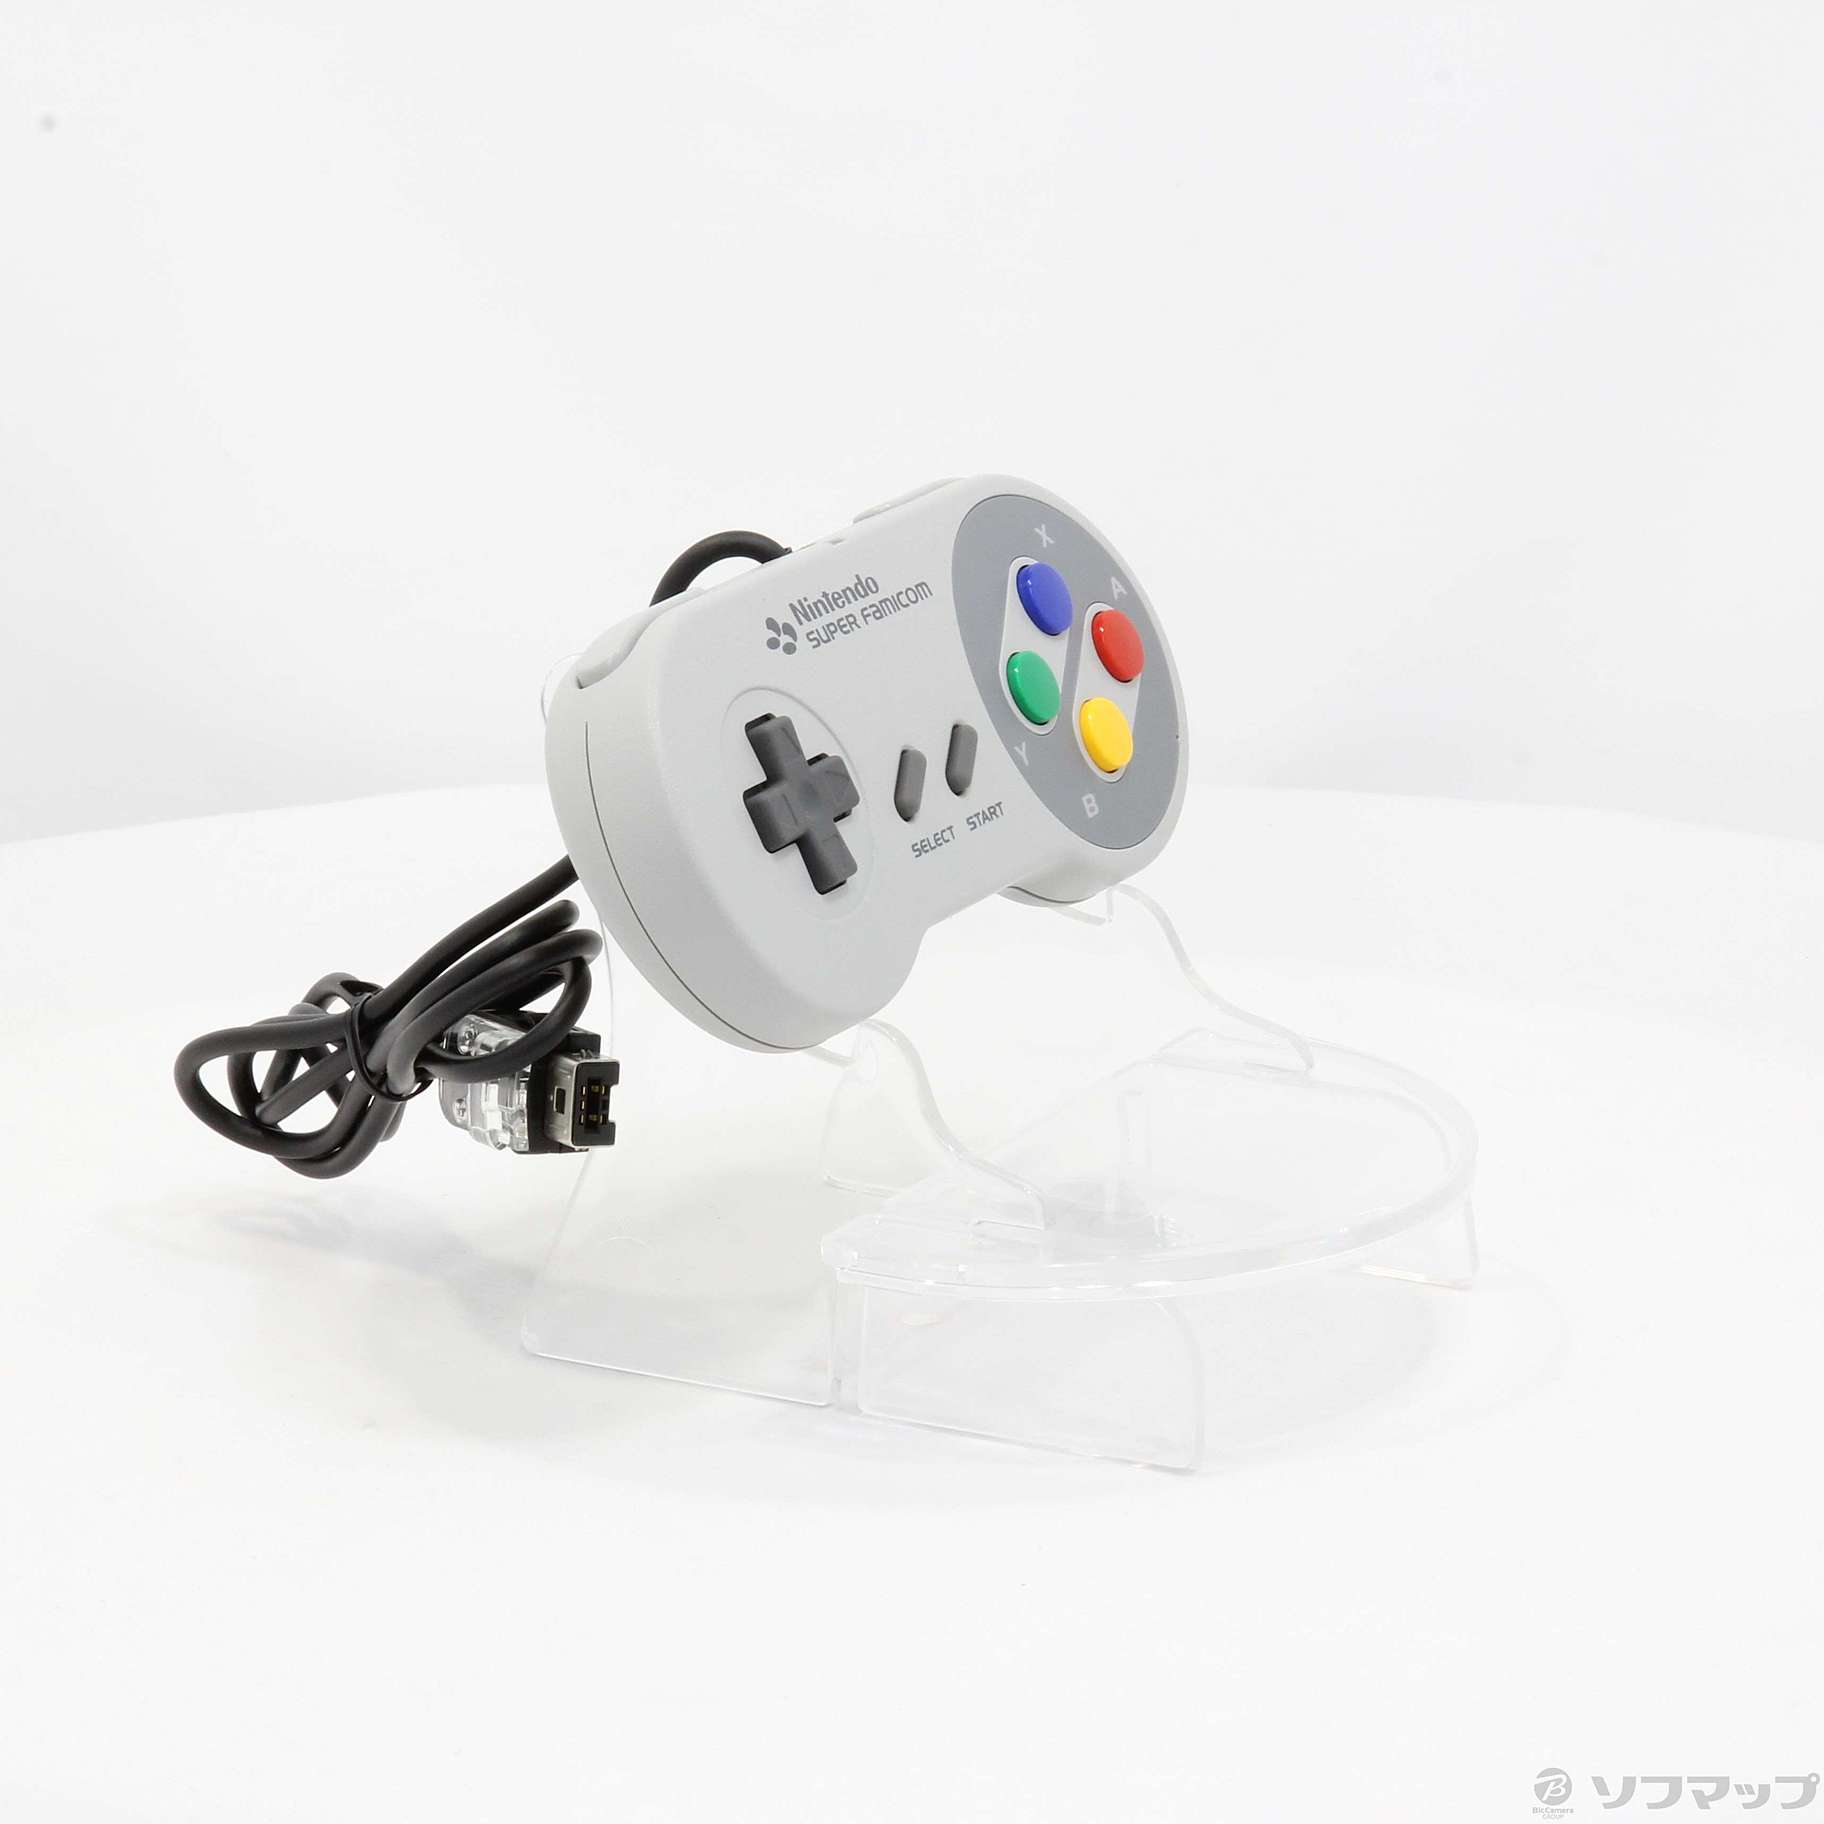 Wiiスーパーファミコンクラシックコントローラ 【Wii】